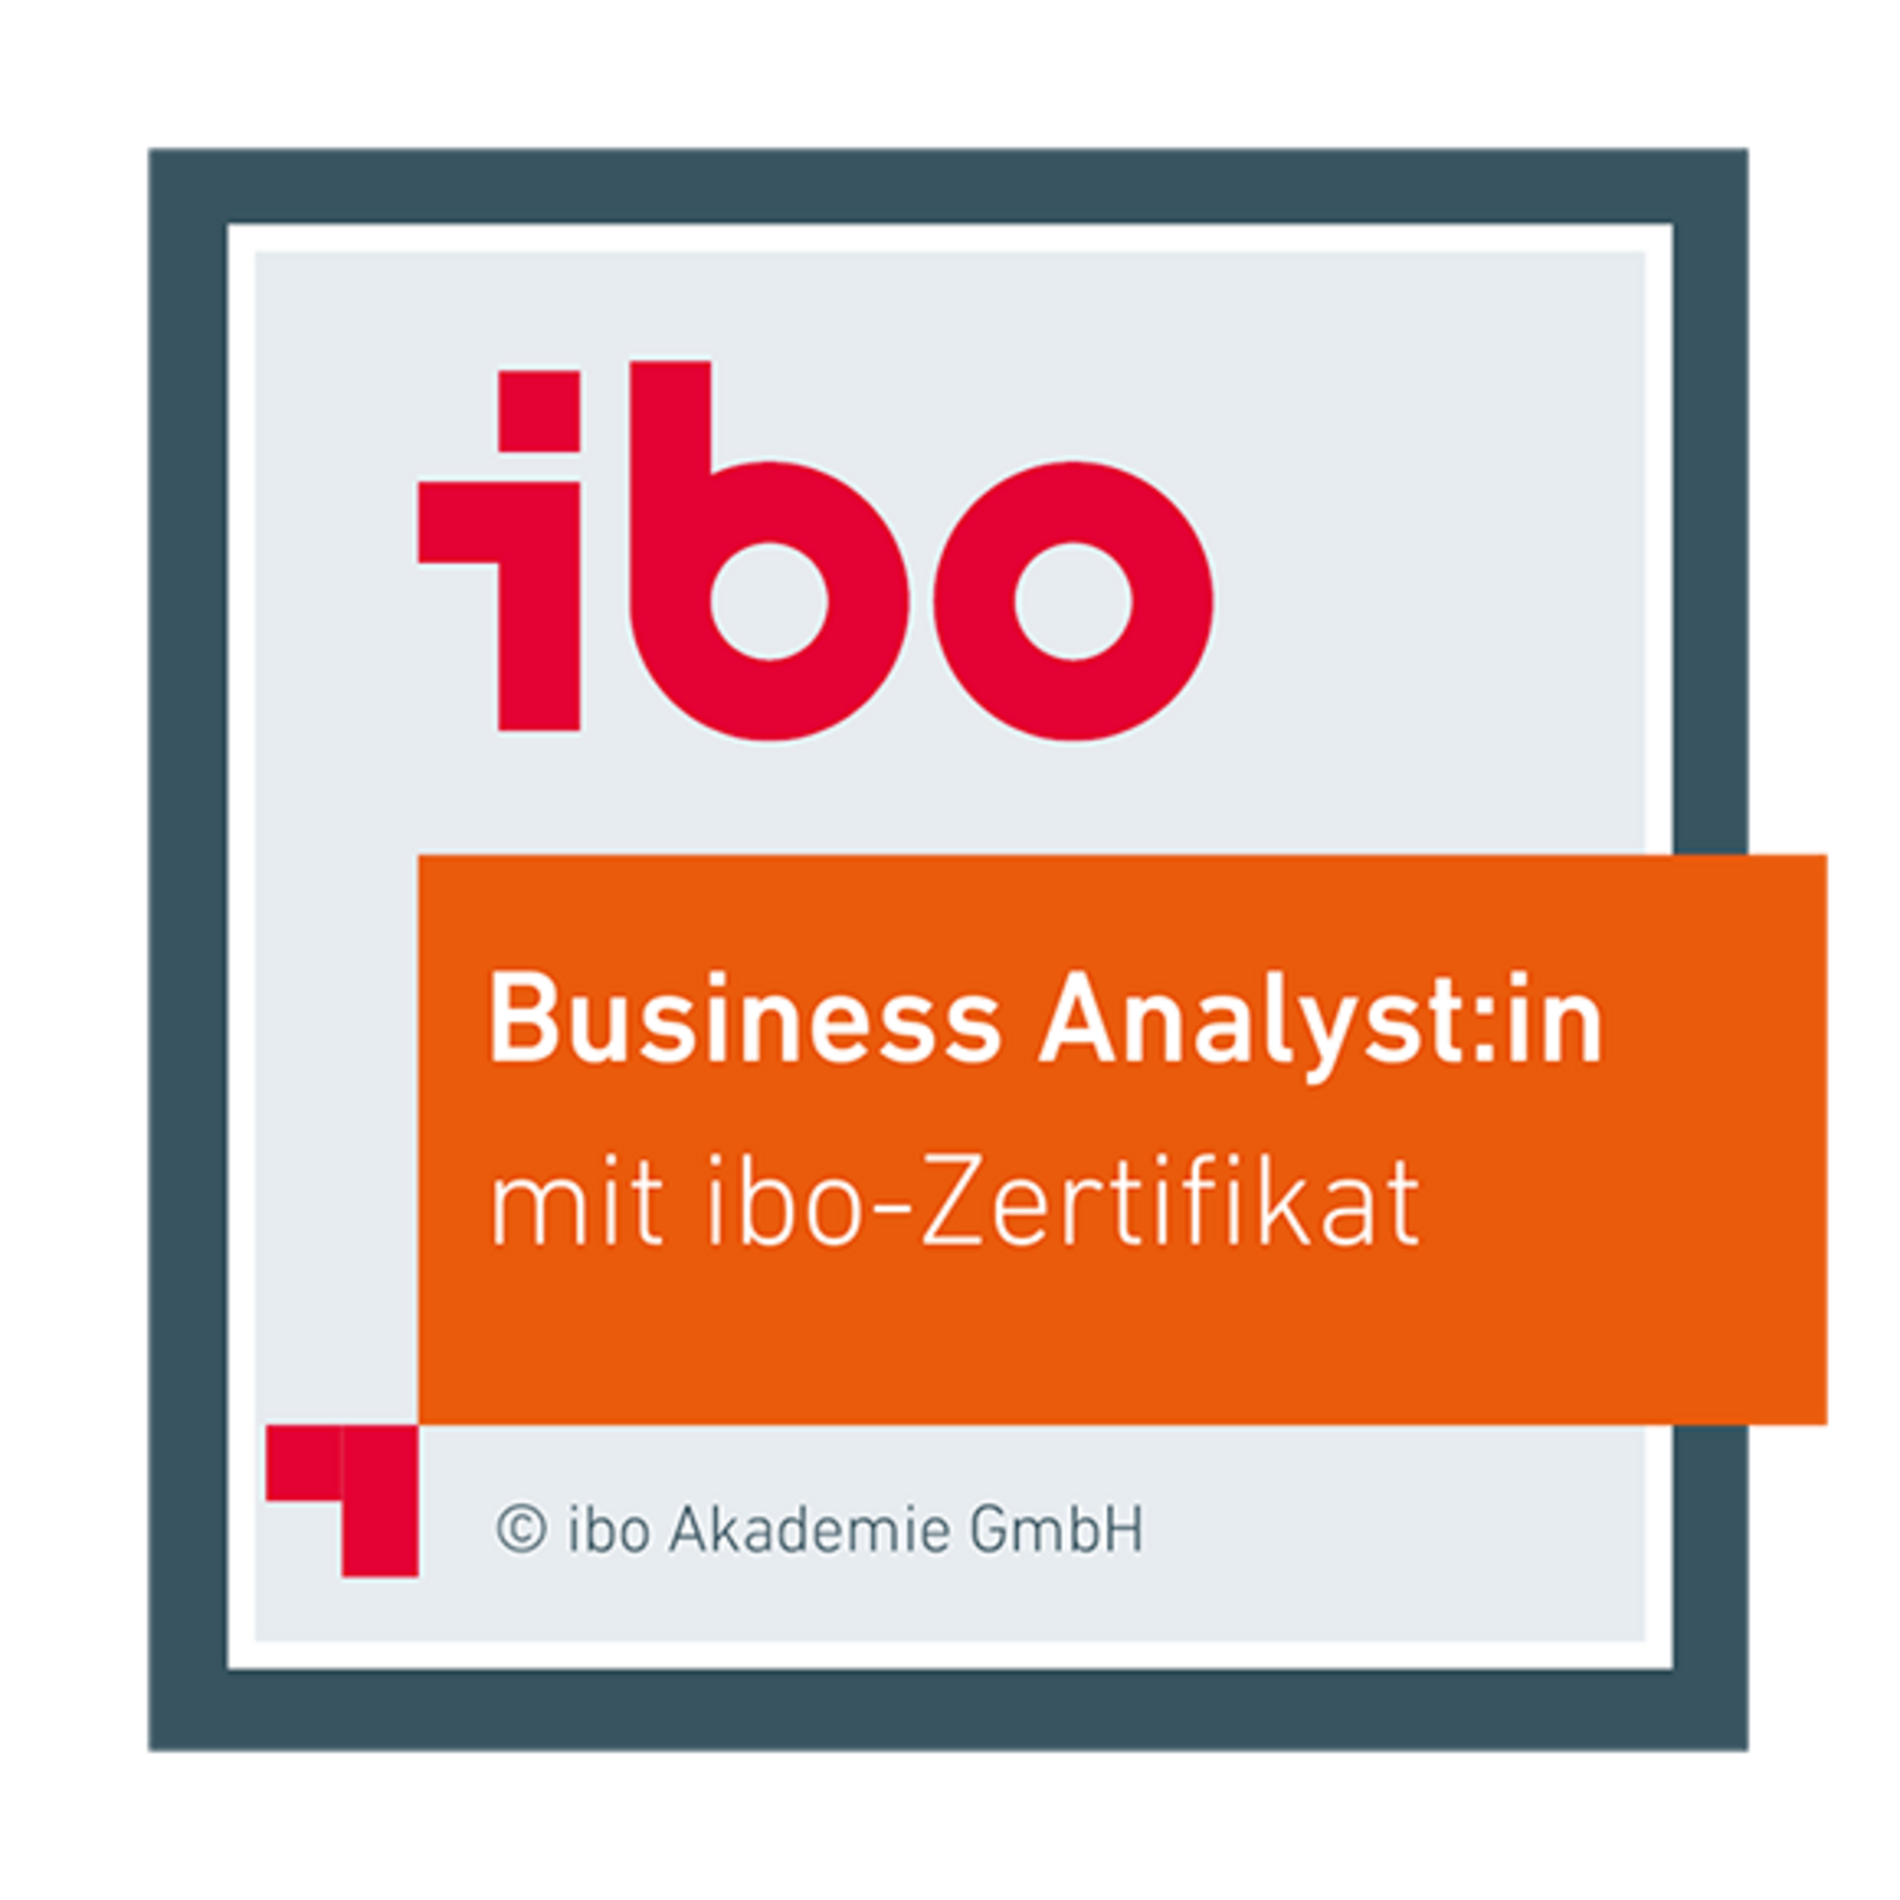 ibo Badge: das ibo-Zertifikat in digitaler Form. Hier für den Business-Analyst mit ibo-Zertifikat